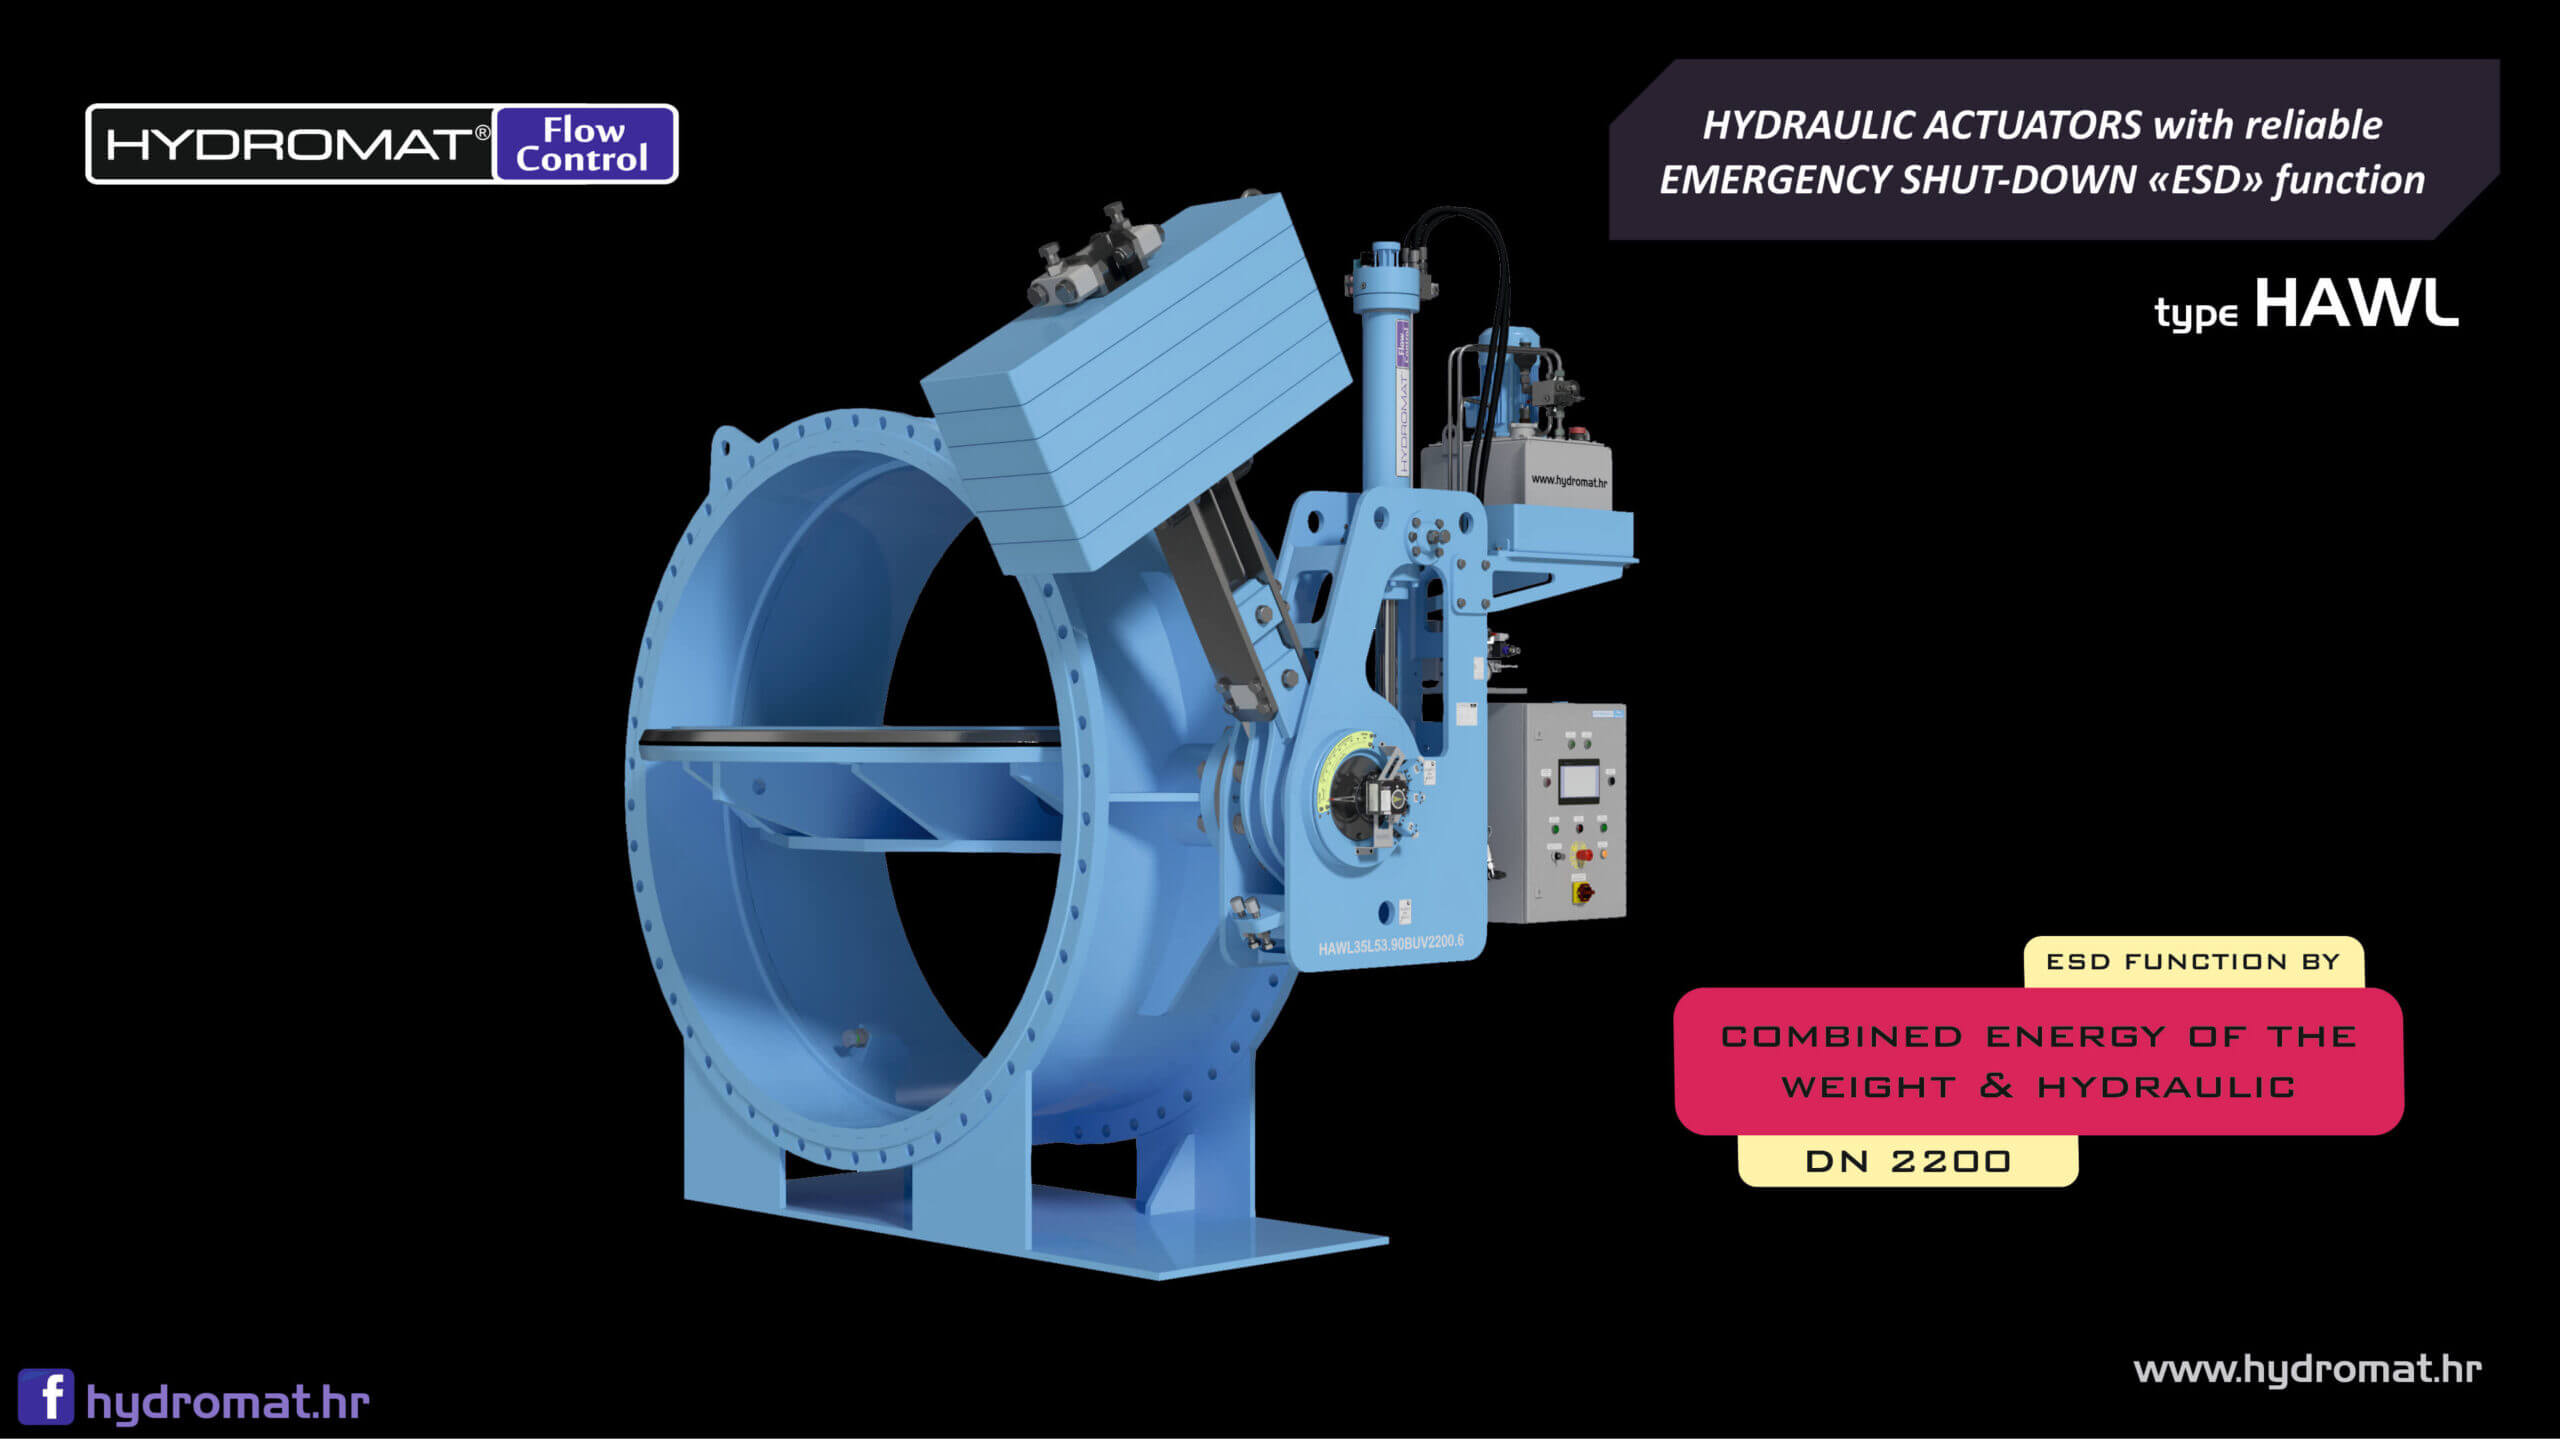 Hydromats actuators and valve automation